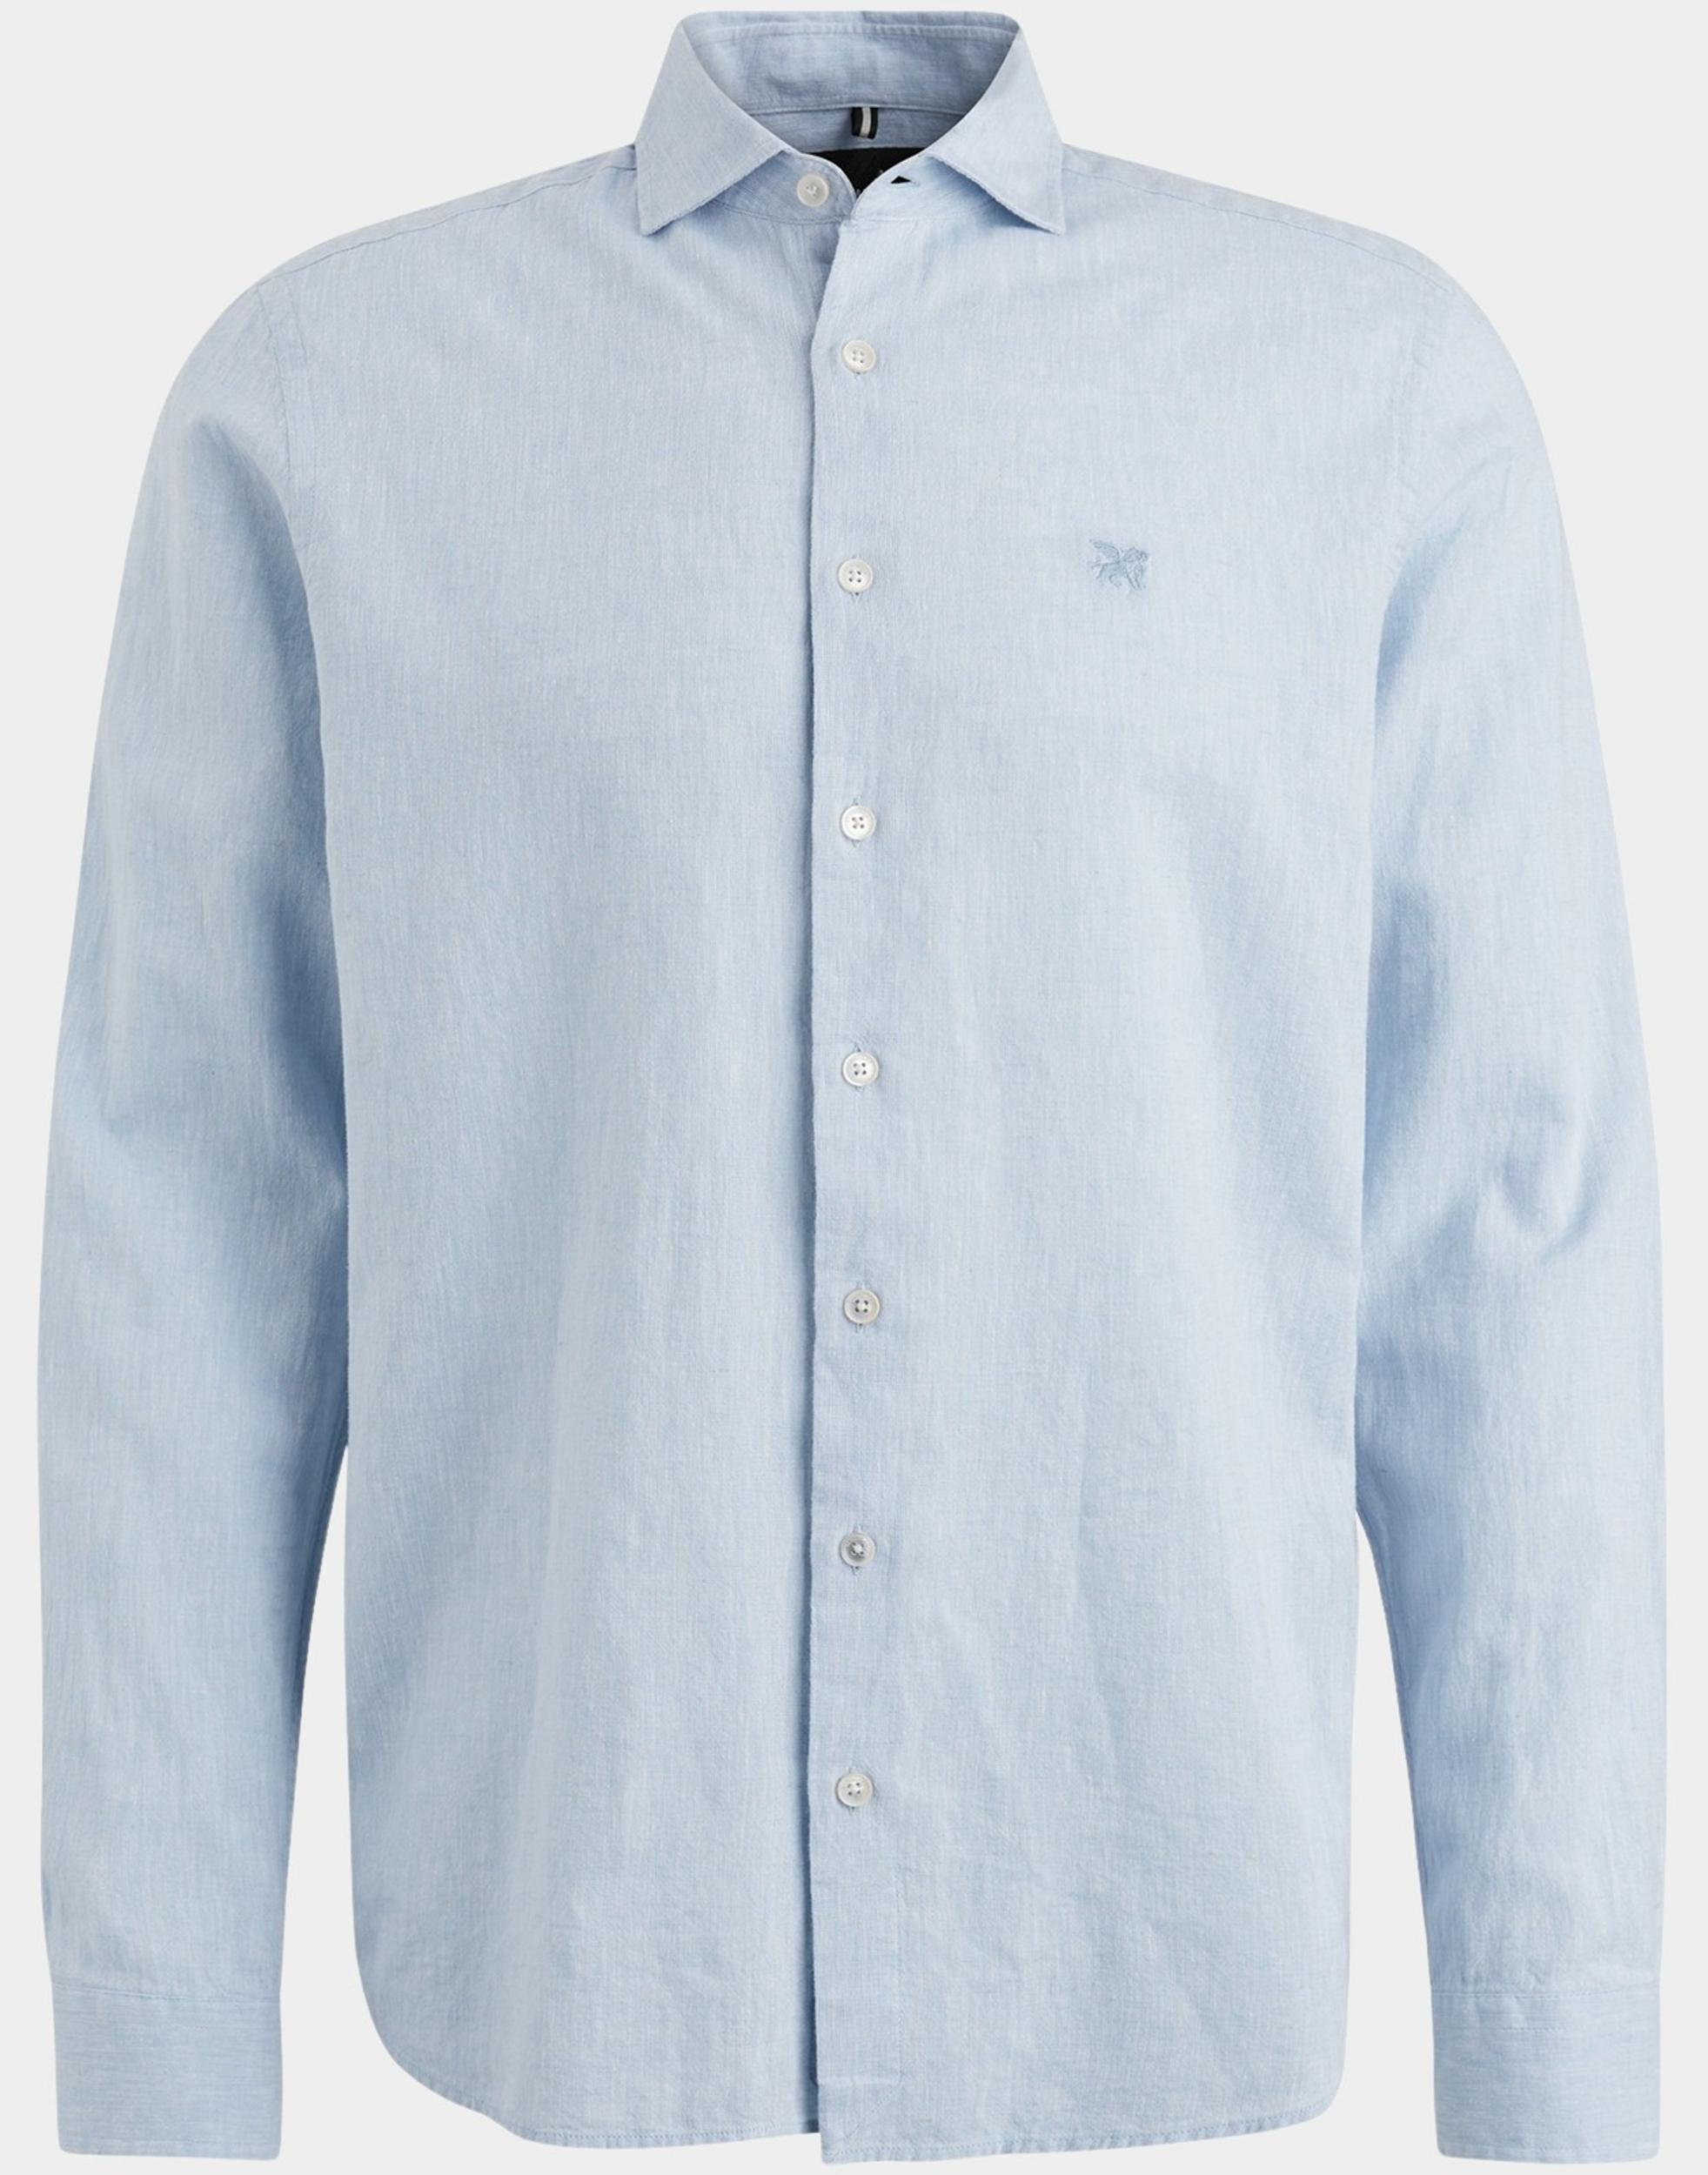 Vanguard Casual hemd lange mouw Blauw Long Sleeve Shirt Linen Cotto VSI2404250/5376